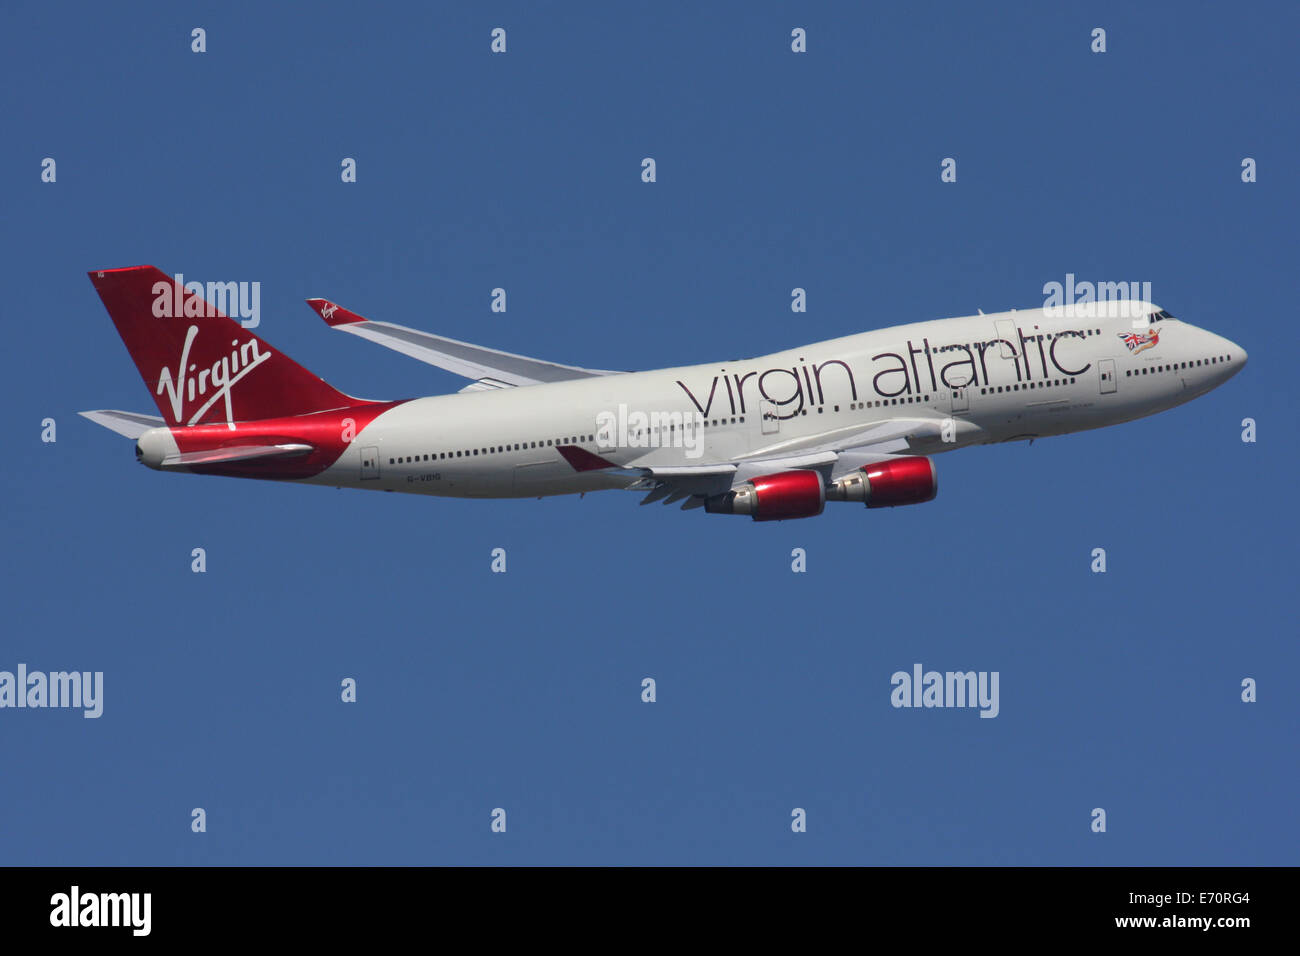 virgin atlantic airlines Stock Photo